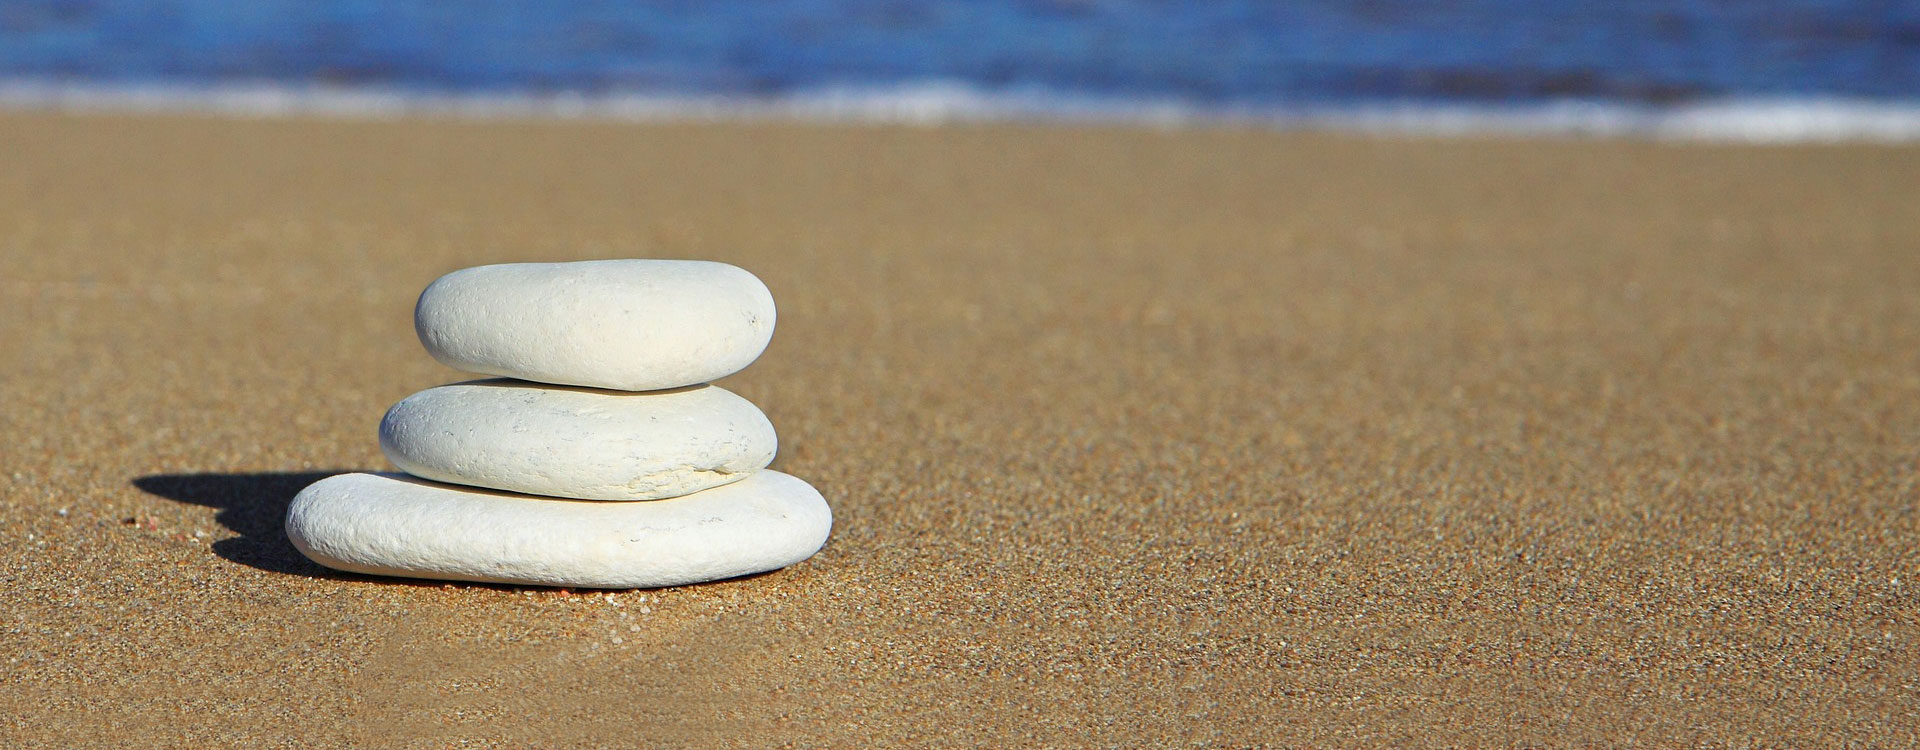 stones on beach